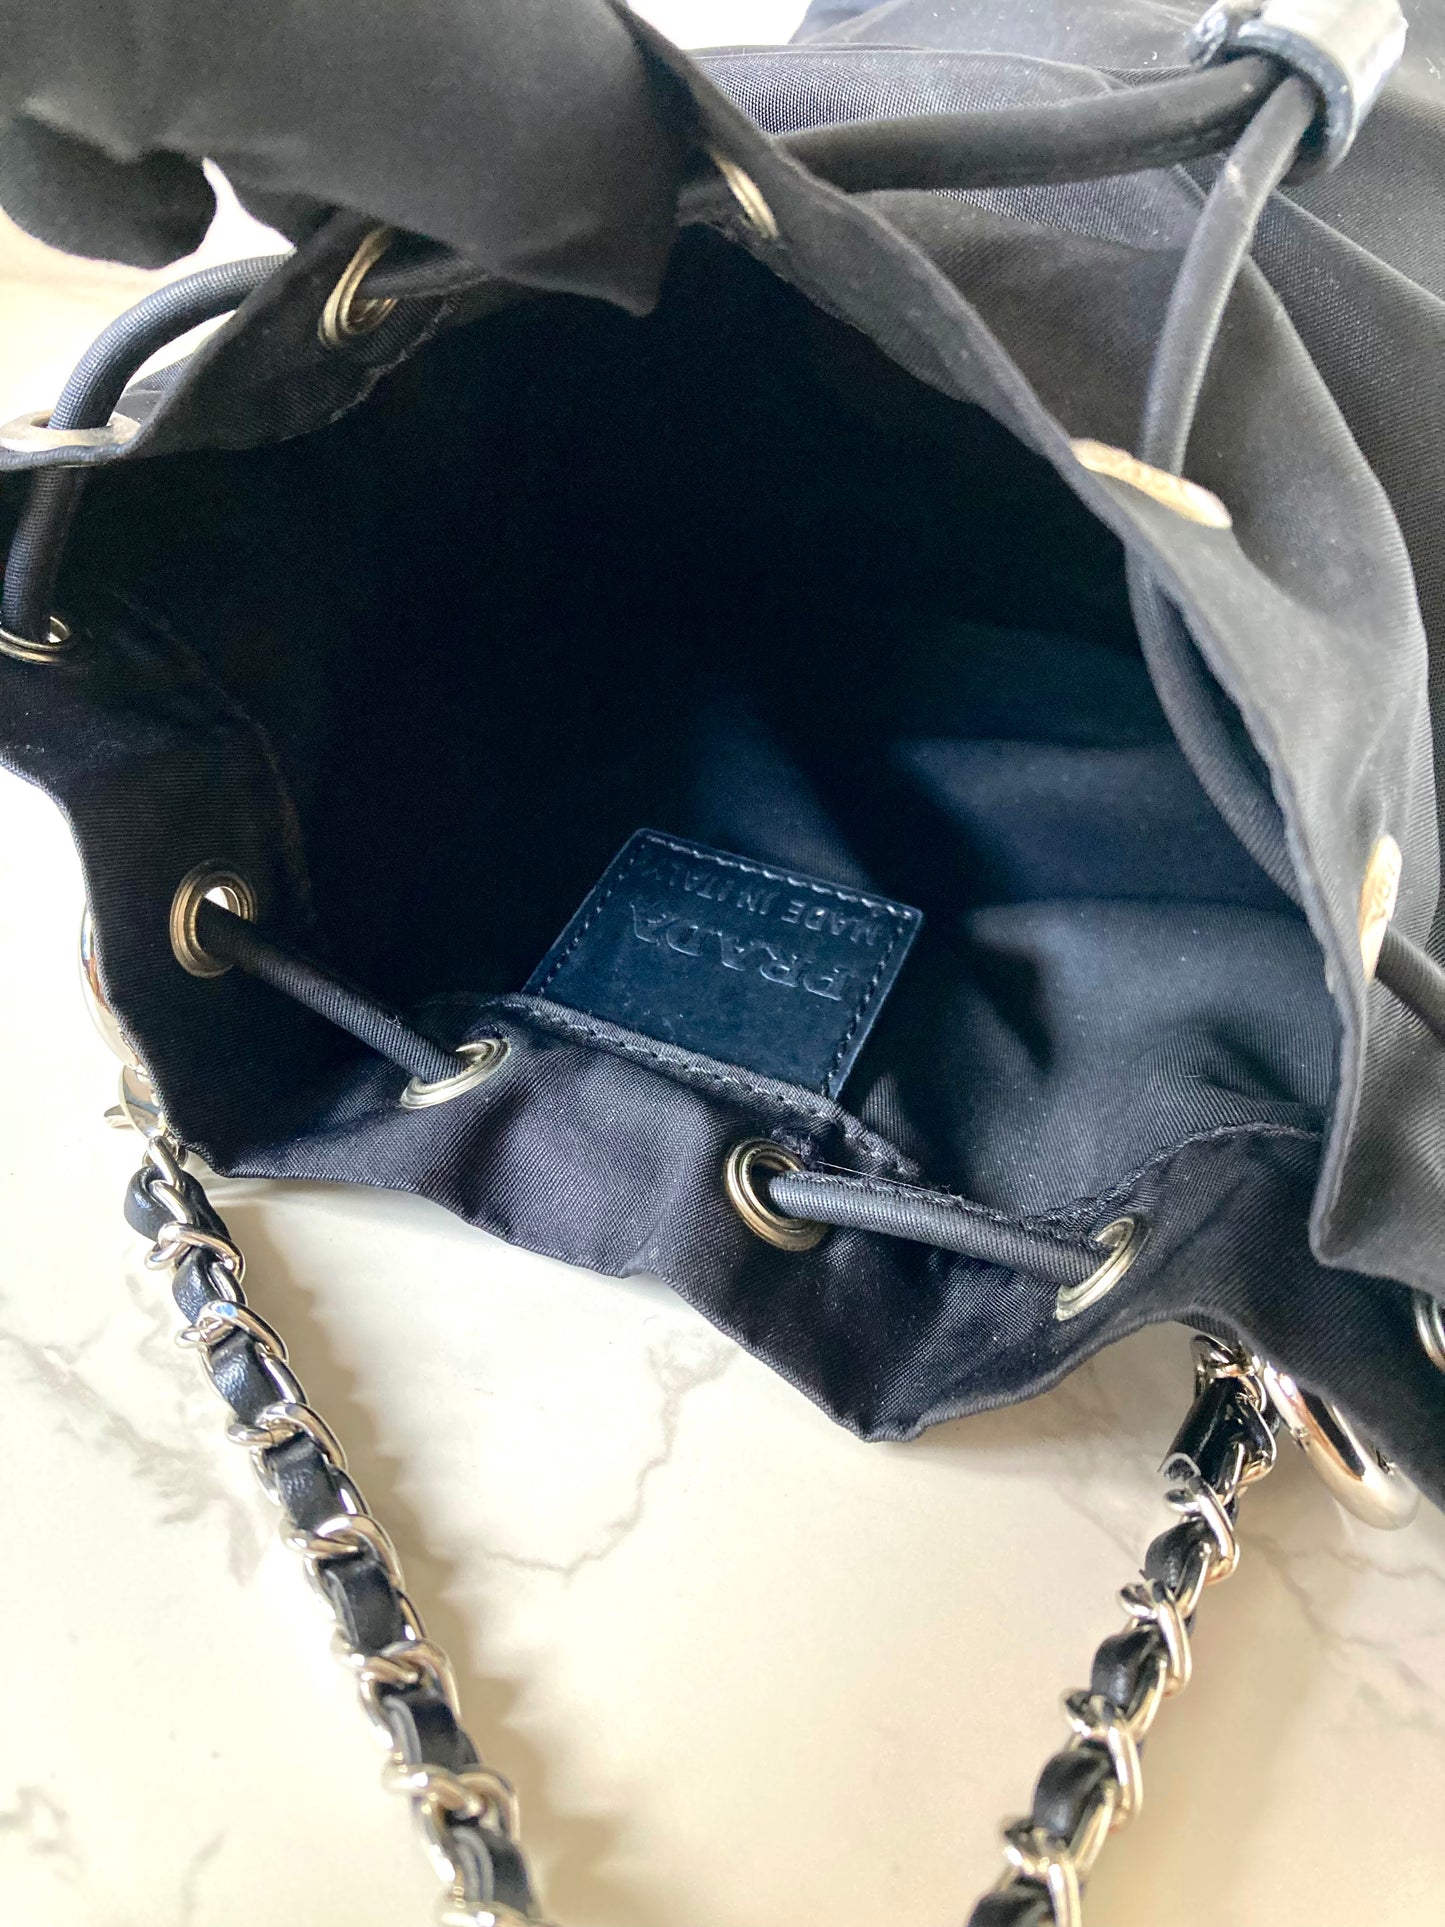 PRADA Black Mini Bucket Chain Crossbody Bag